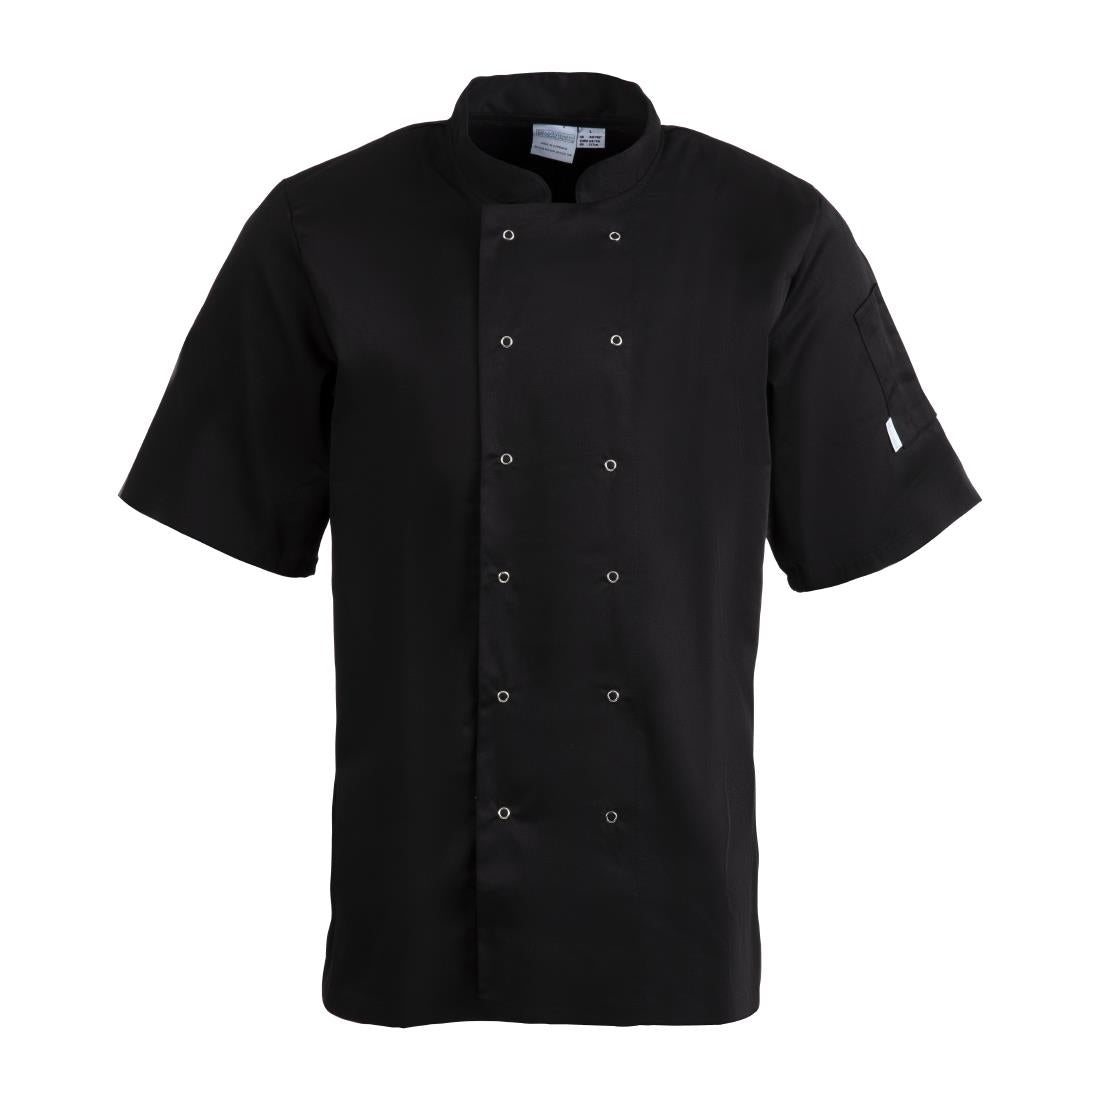 A439-3XL Whites Vegas Unisex Chefs Jacket Short Sleeve Black 3XL JD Catering Equipment Solutions Ltd